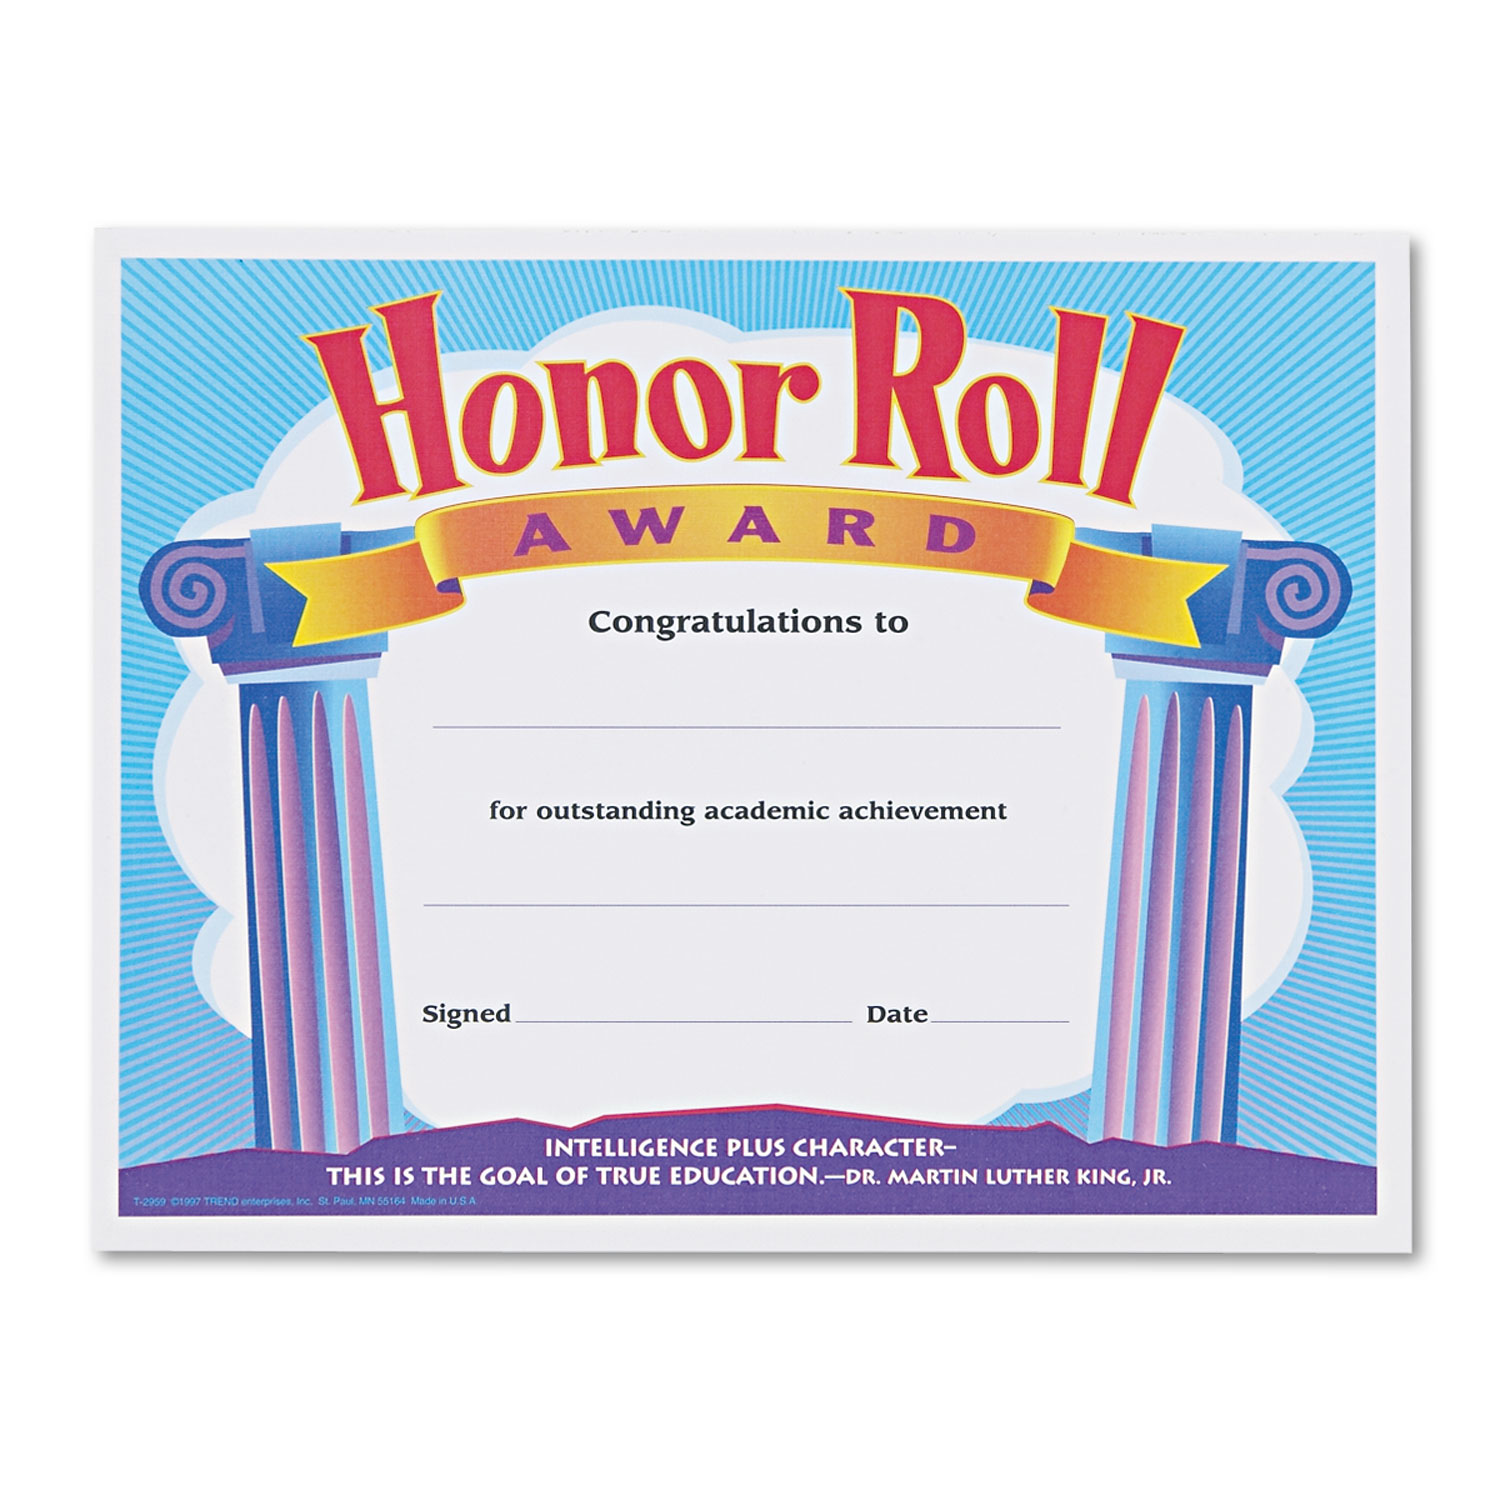 honor-roll-award-certificates-11-x-8-5-horizontal-orientation